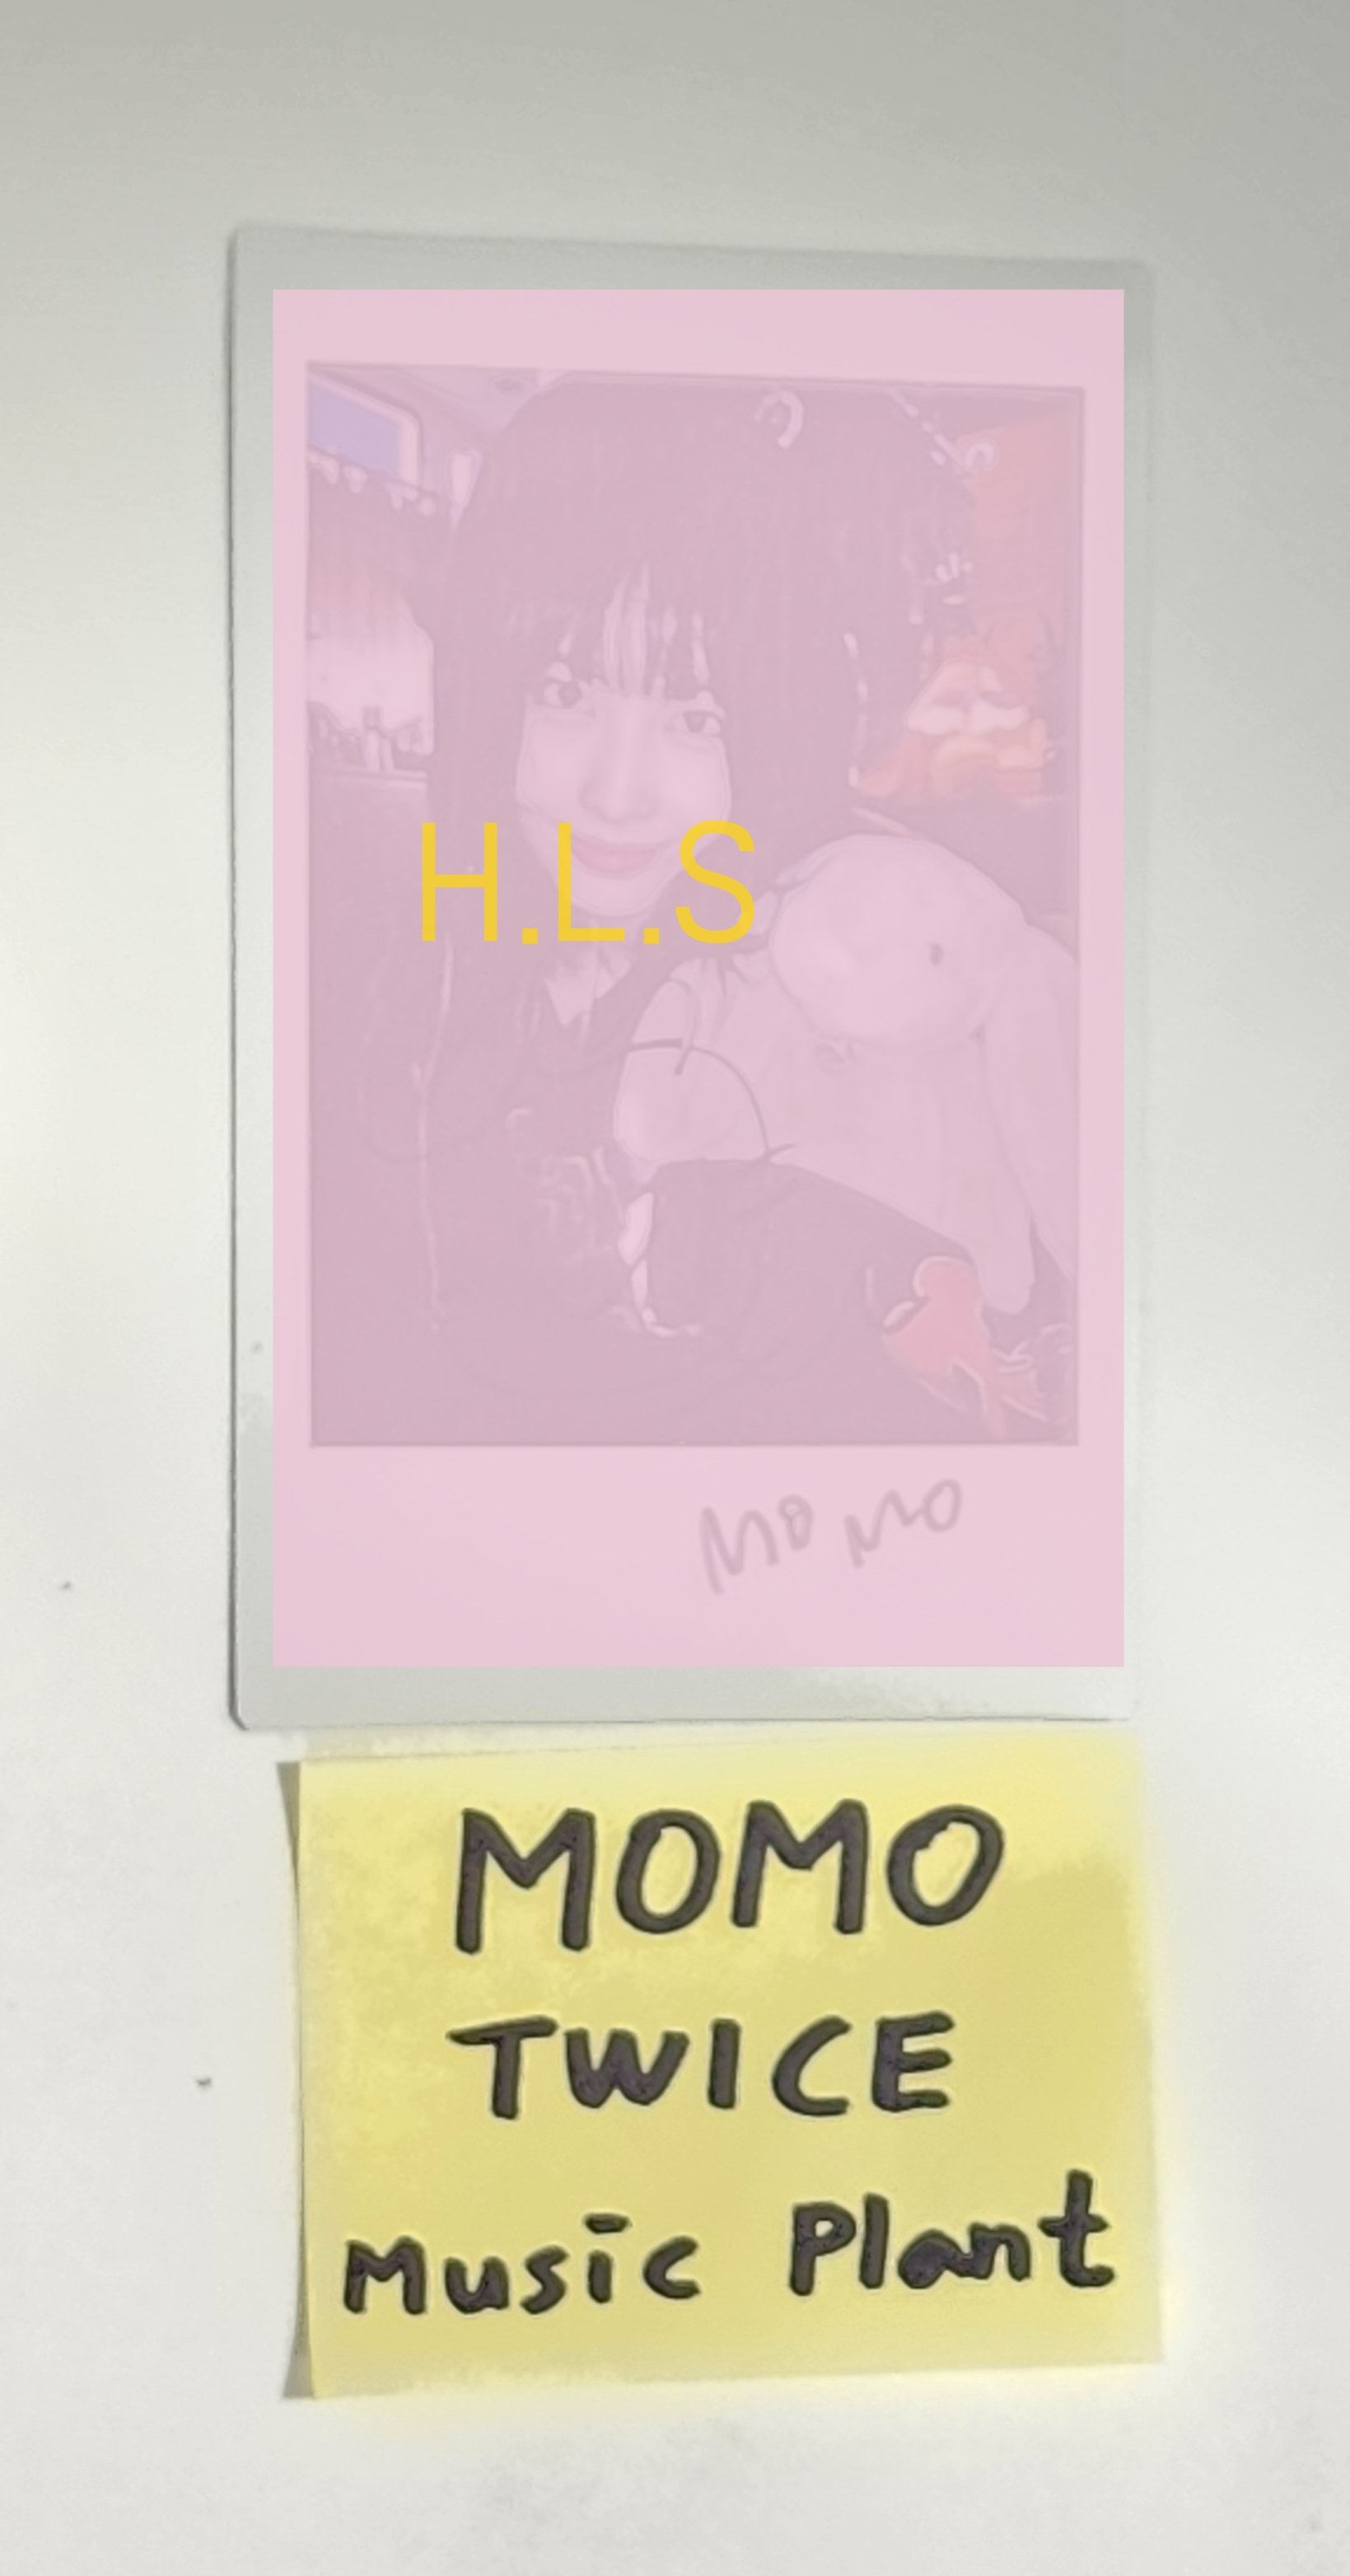 MOMO (Of TWICE) 